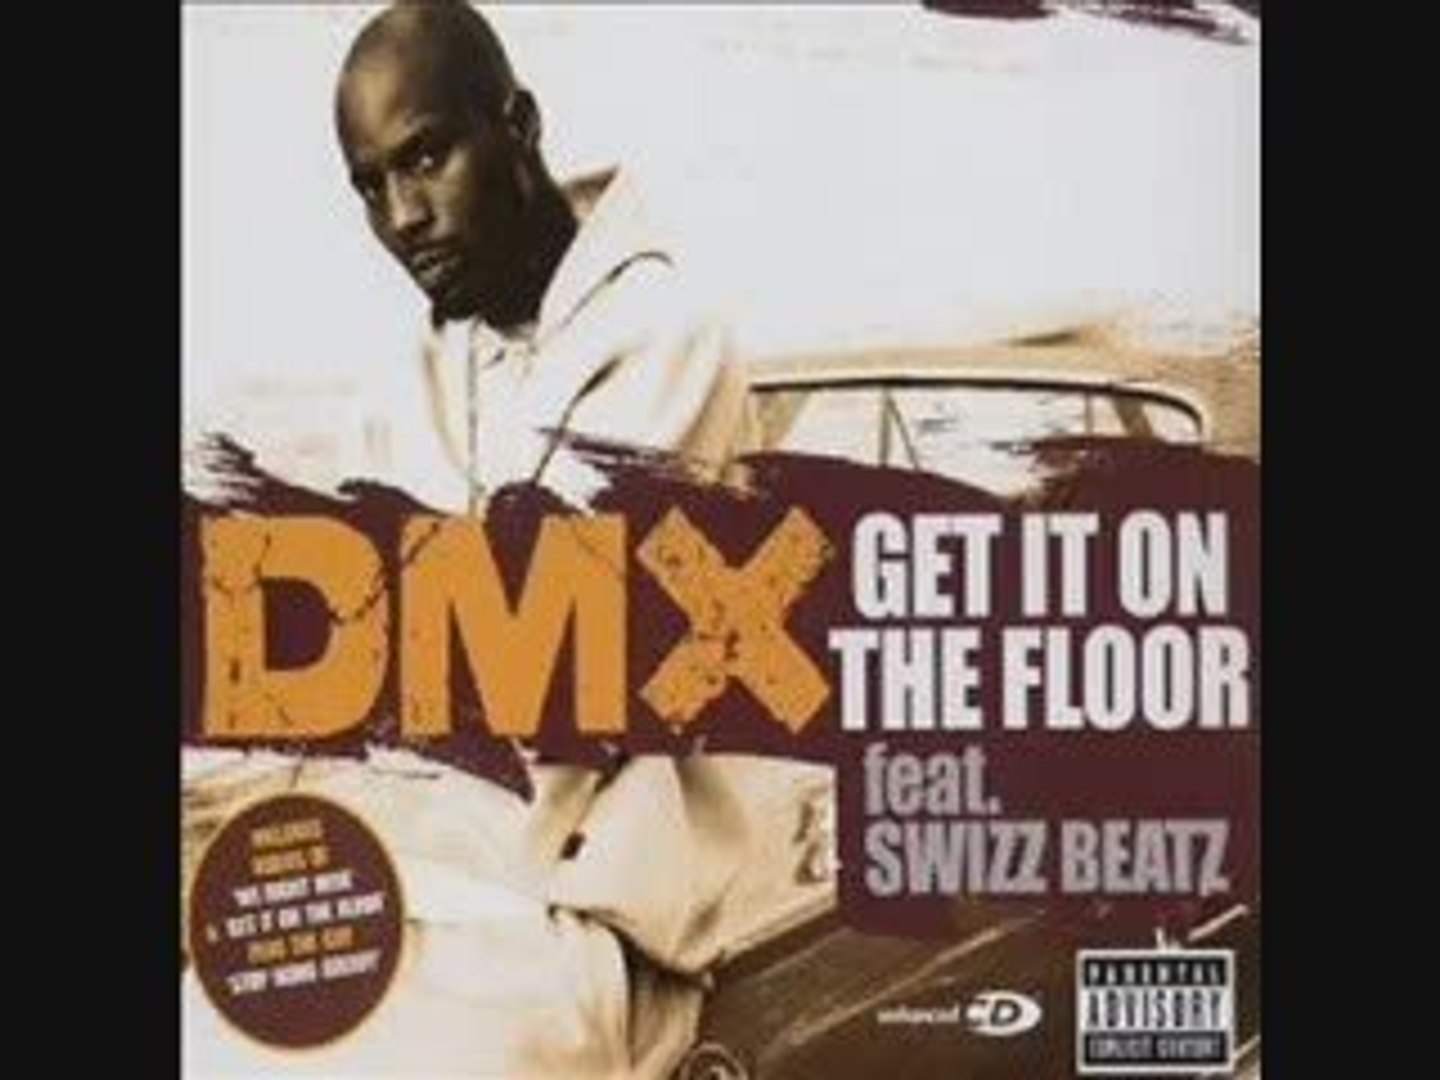 Dmx Feat Swizz Beatz Get In On The Floor Video Dailymotion